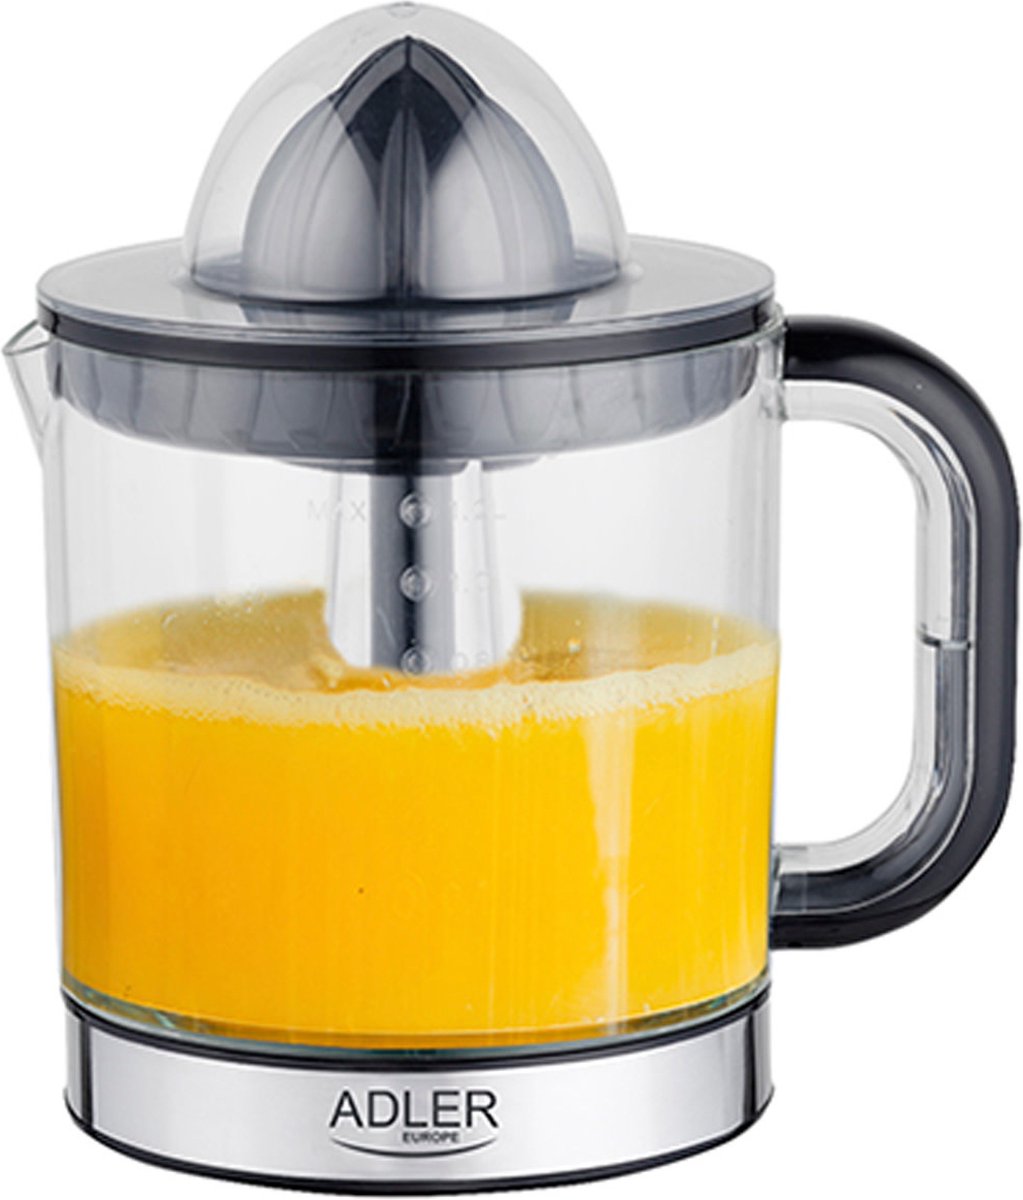 Adler Ad 4012 - Elektrische Citruspers - 1.2 L - Gris